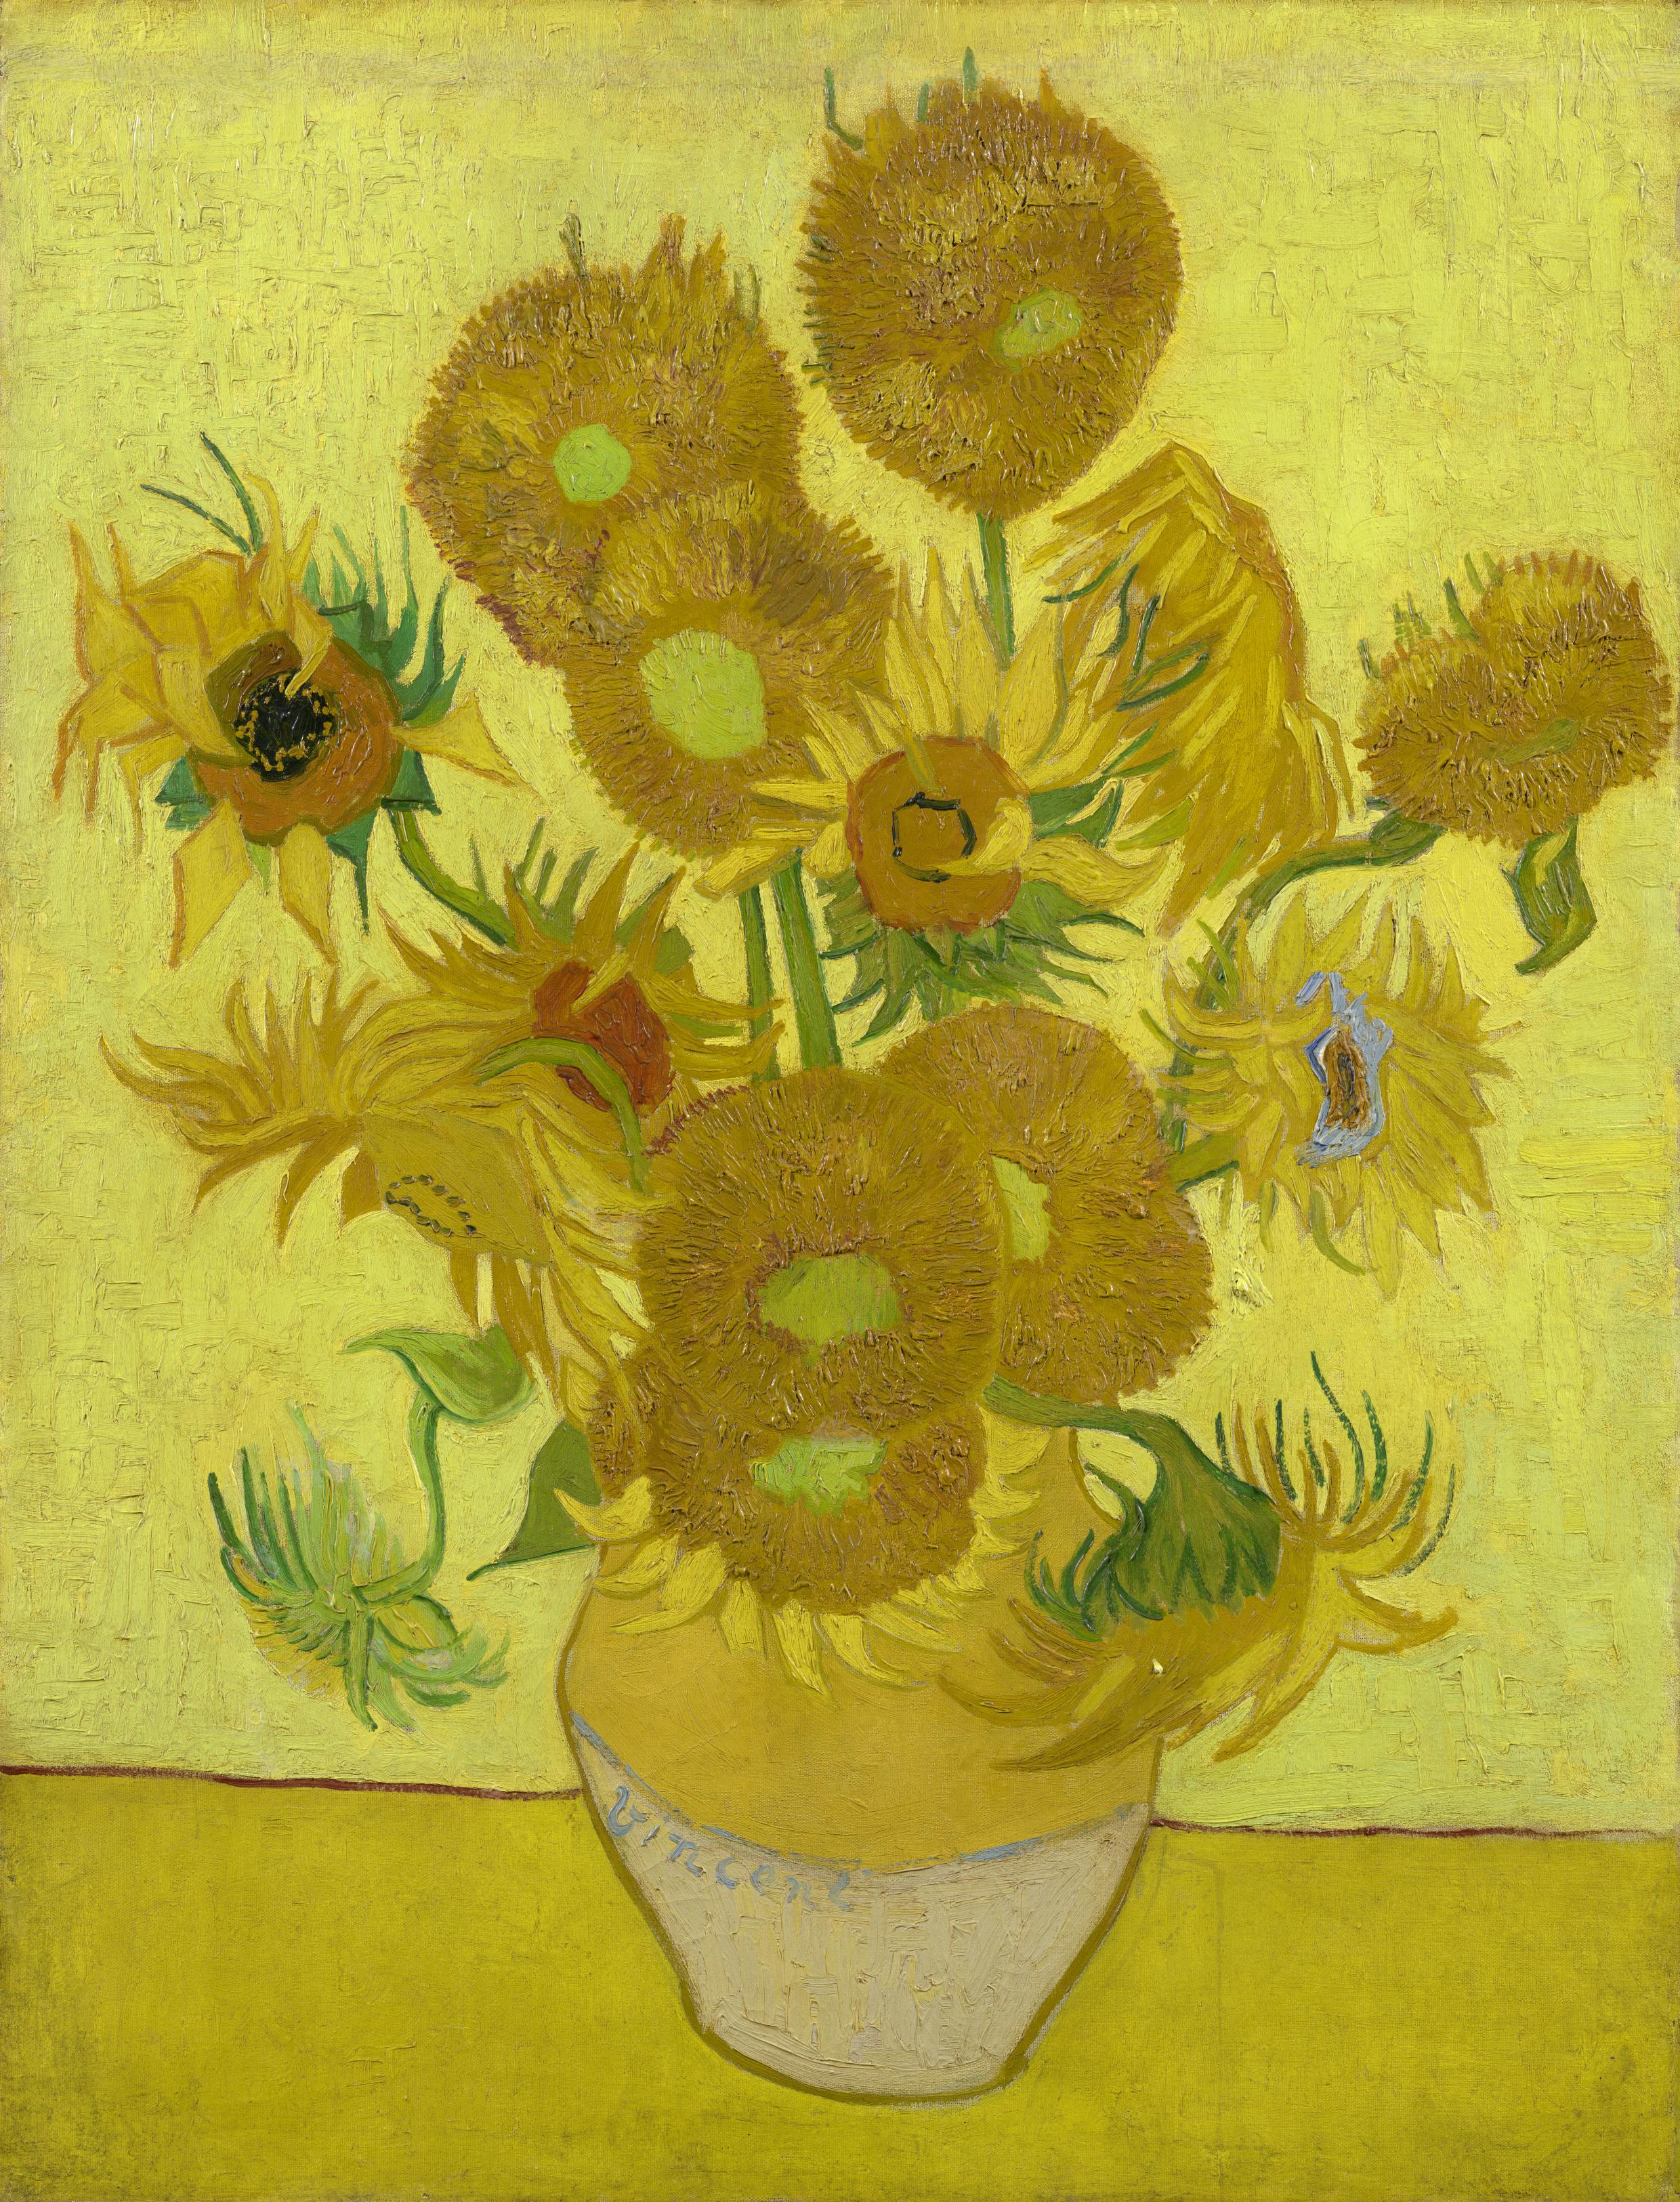 向日葵 by Vincent van Gogh - January 1889 - 95 cm x 73 cm 